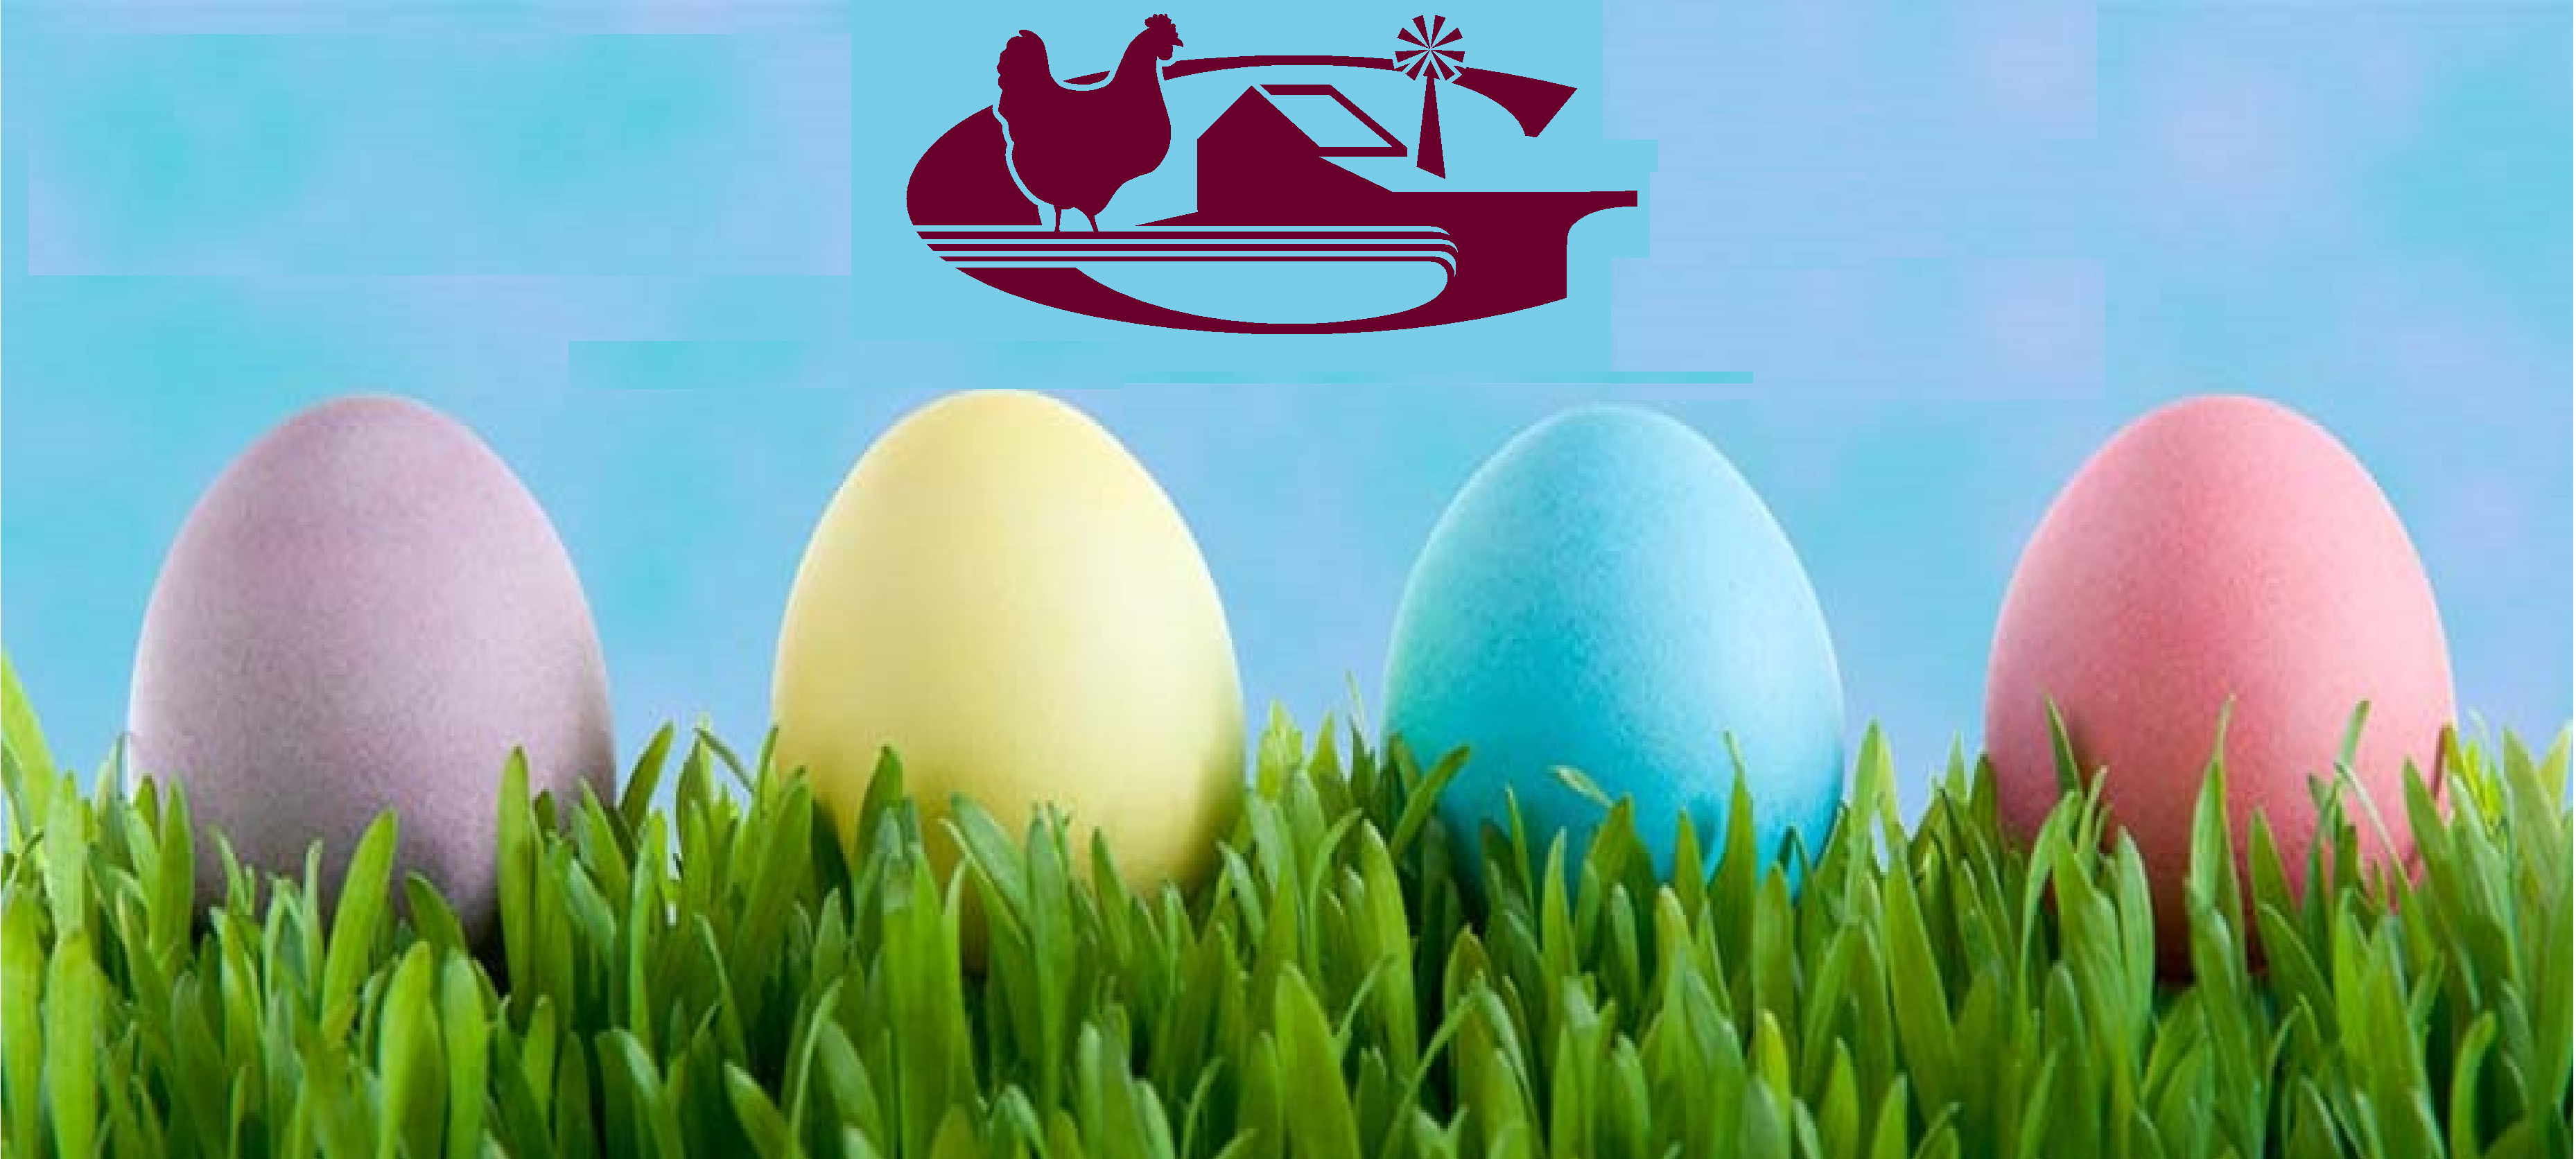 Egg hunt 2024 games. Easter Egg Hunt. Виртуальное пасхальное яйцо. Тысячелетнее пасхальное яйцо.